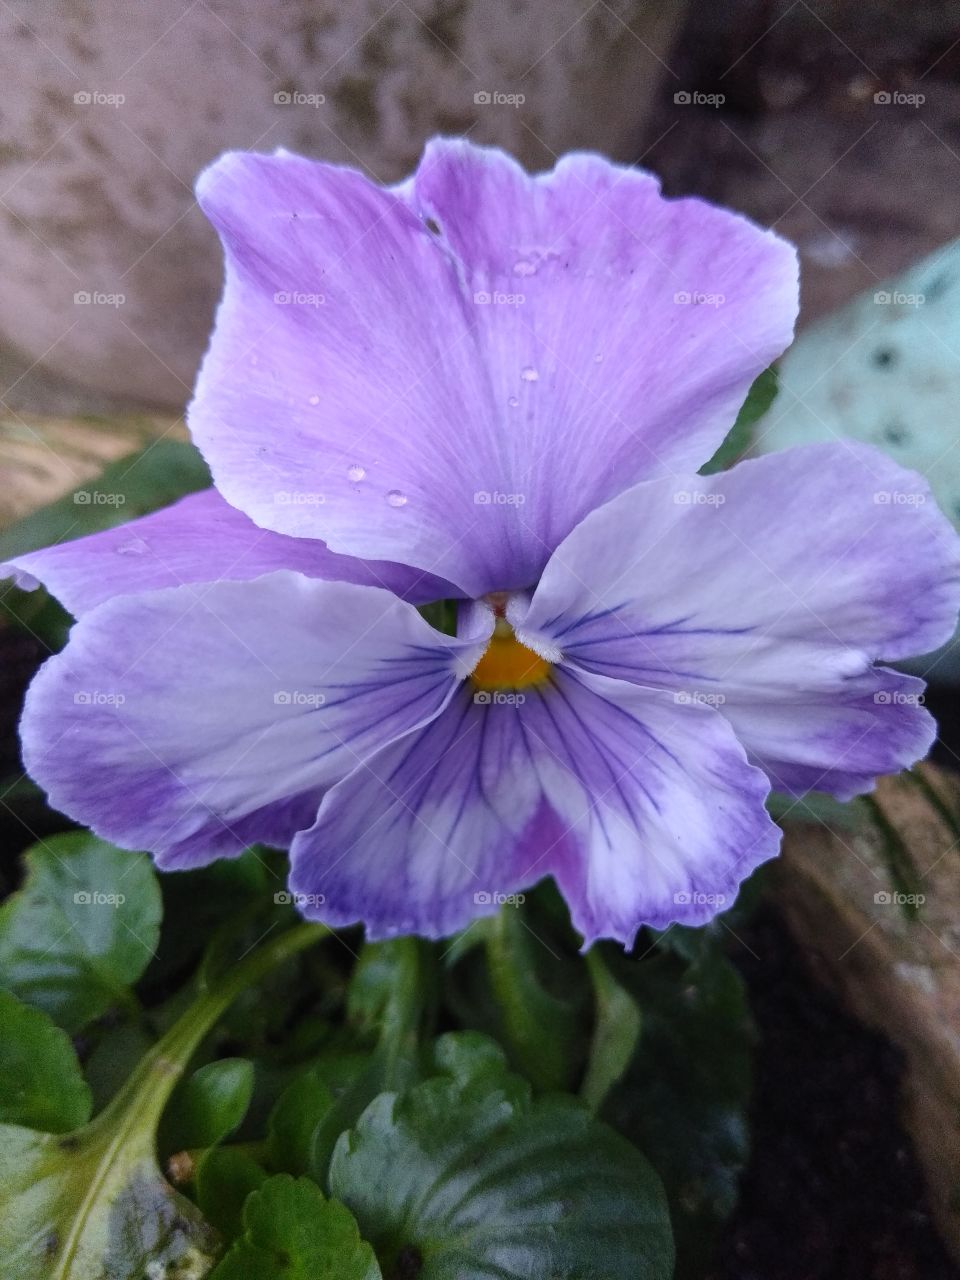 Purple and blue blossom close-up